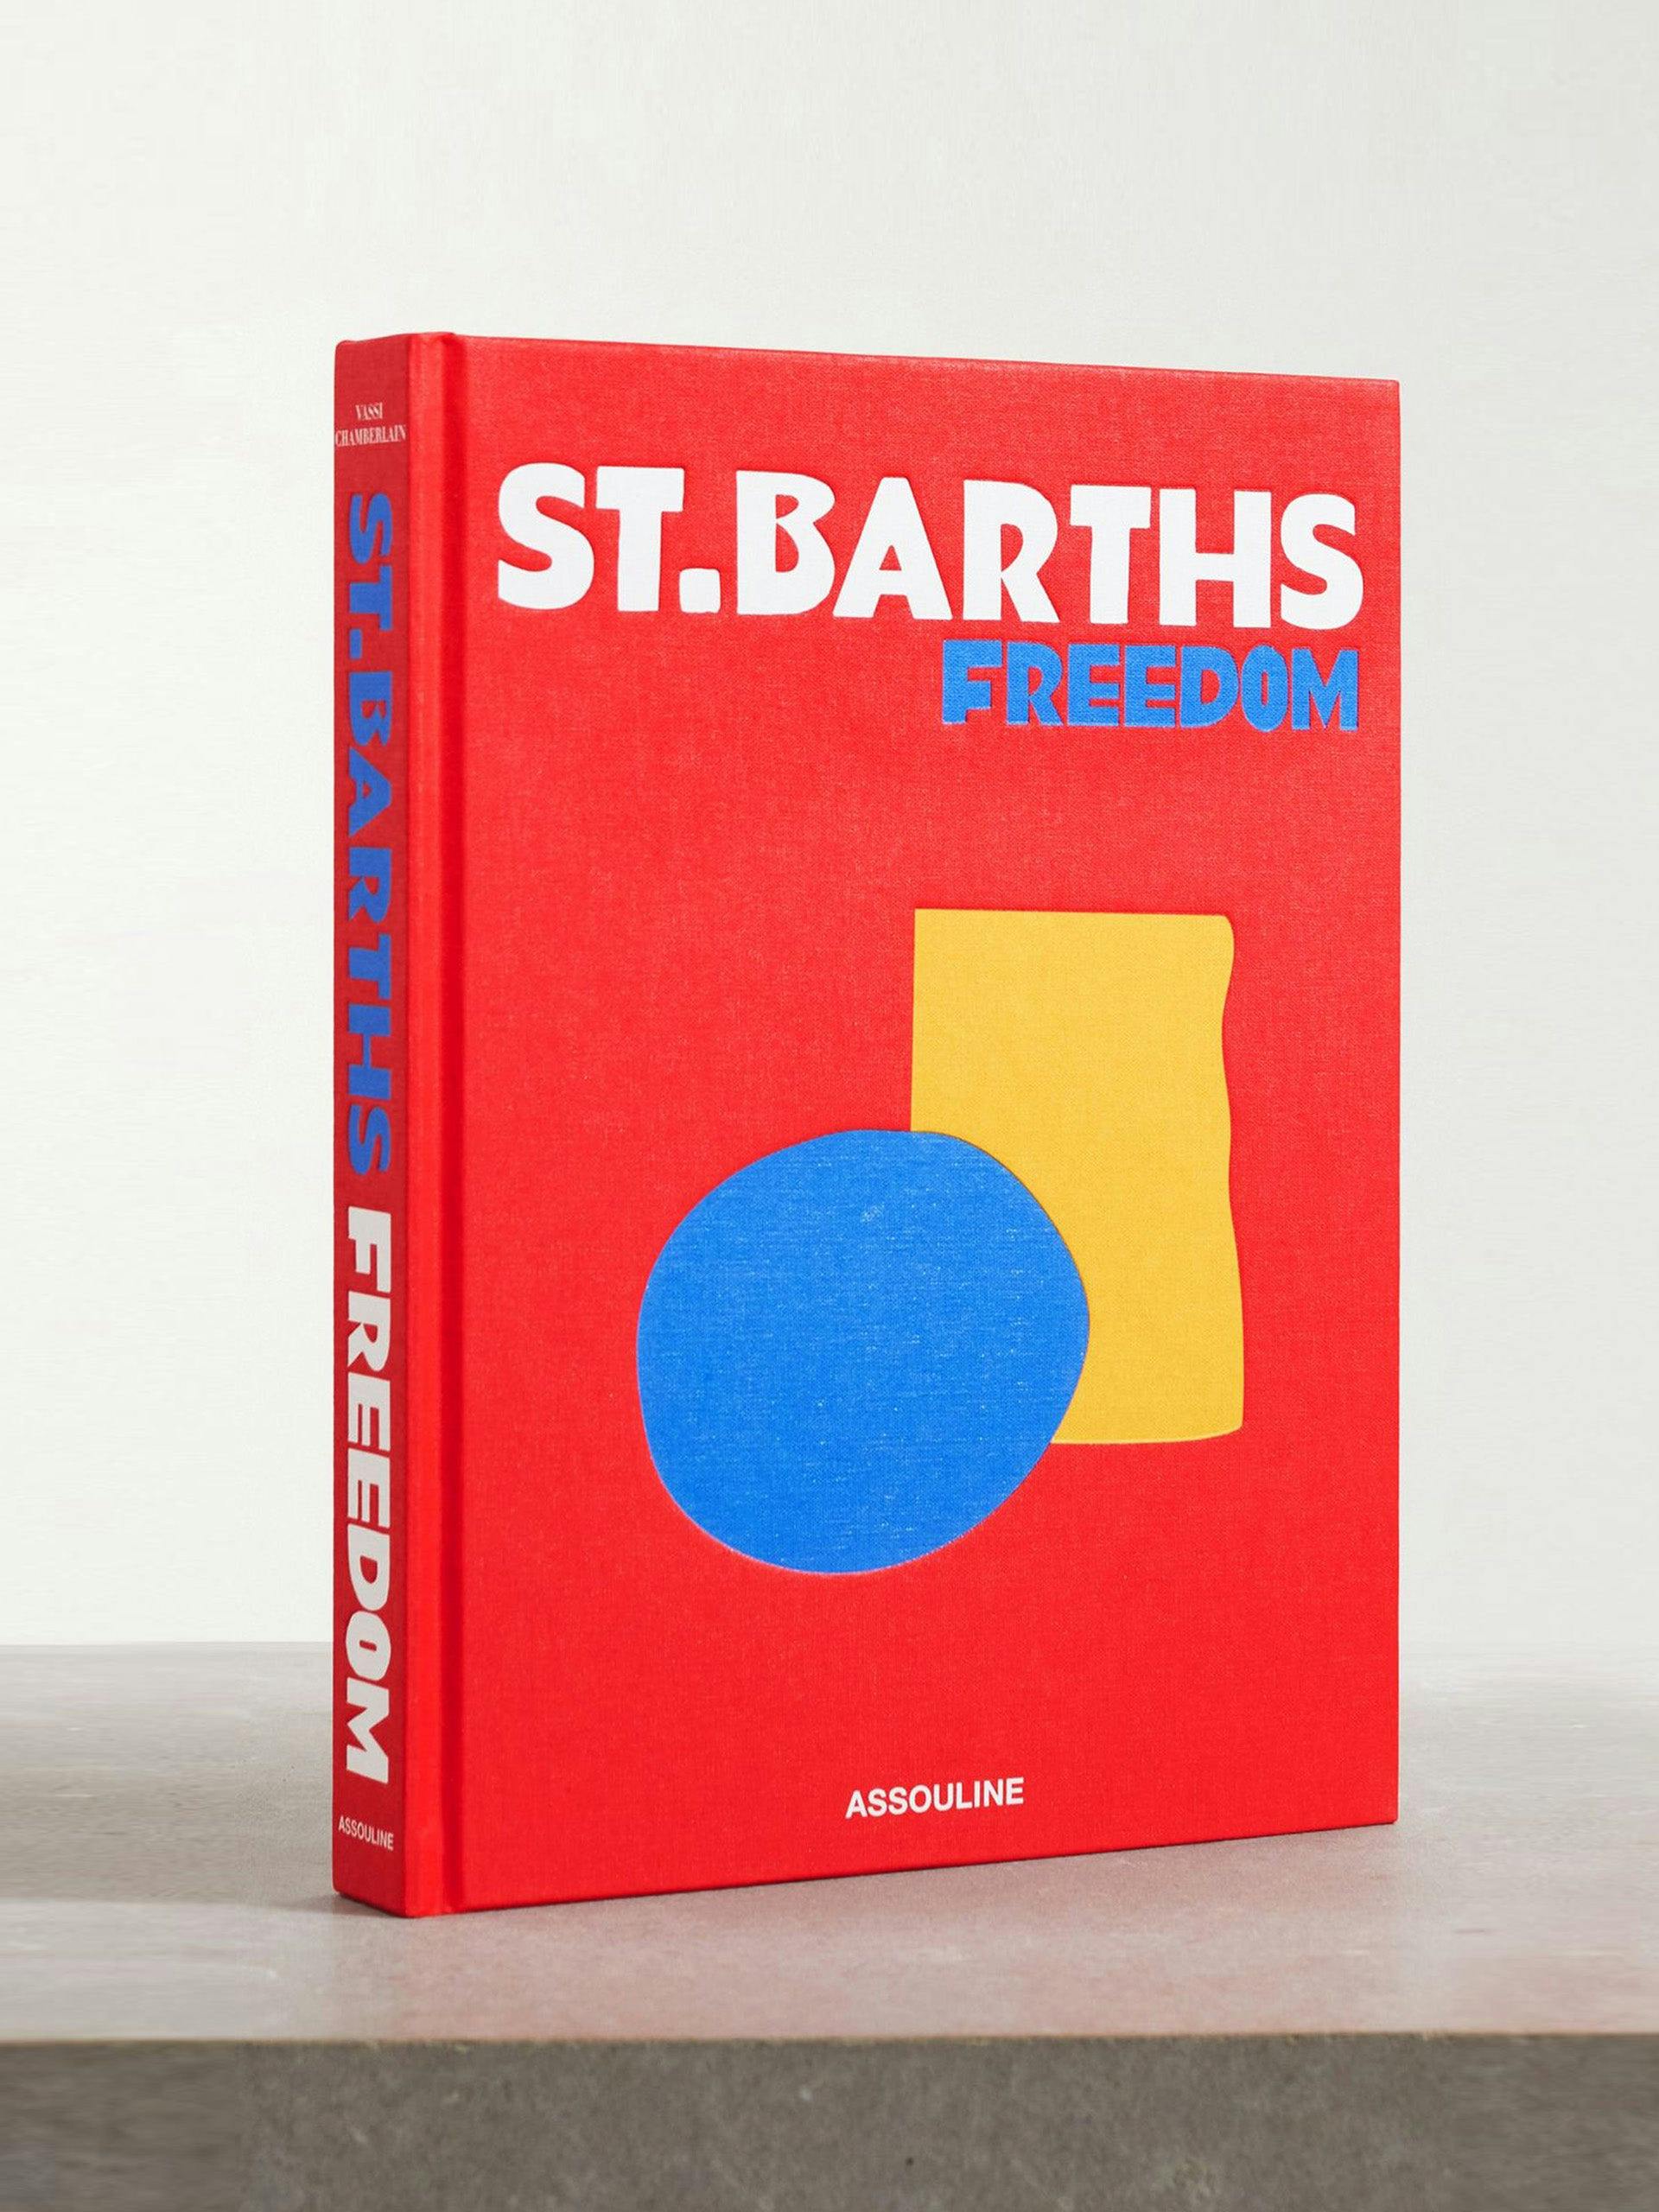 St. Barths Freedom hardback book